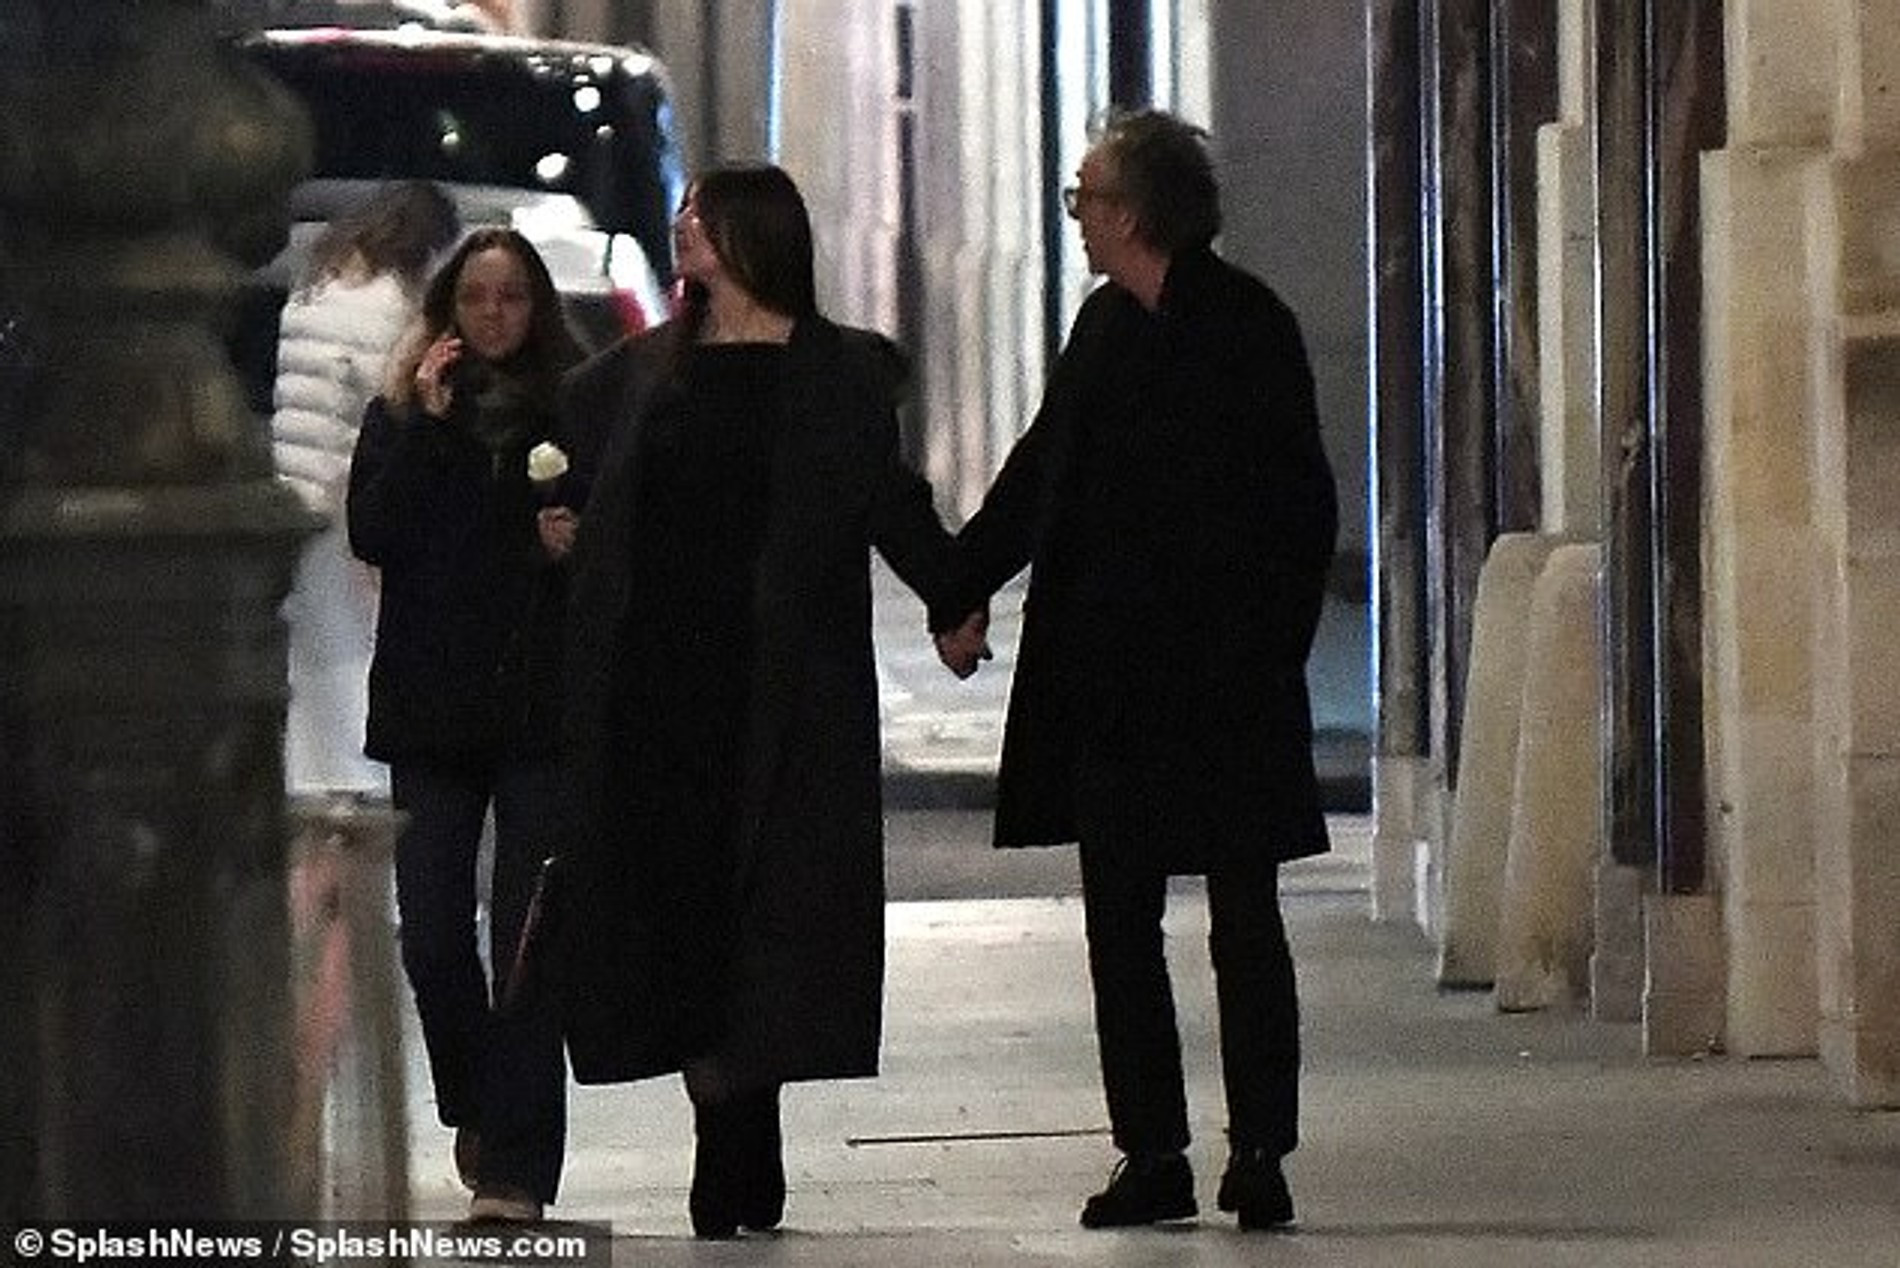 Моника Беллуччи и Тим Бертон на свидании в День святого Валентина
Фото: Daily Mail